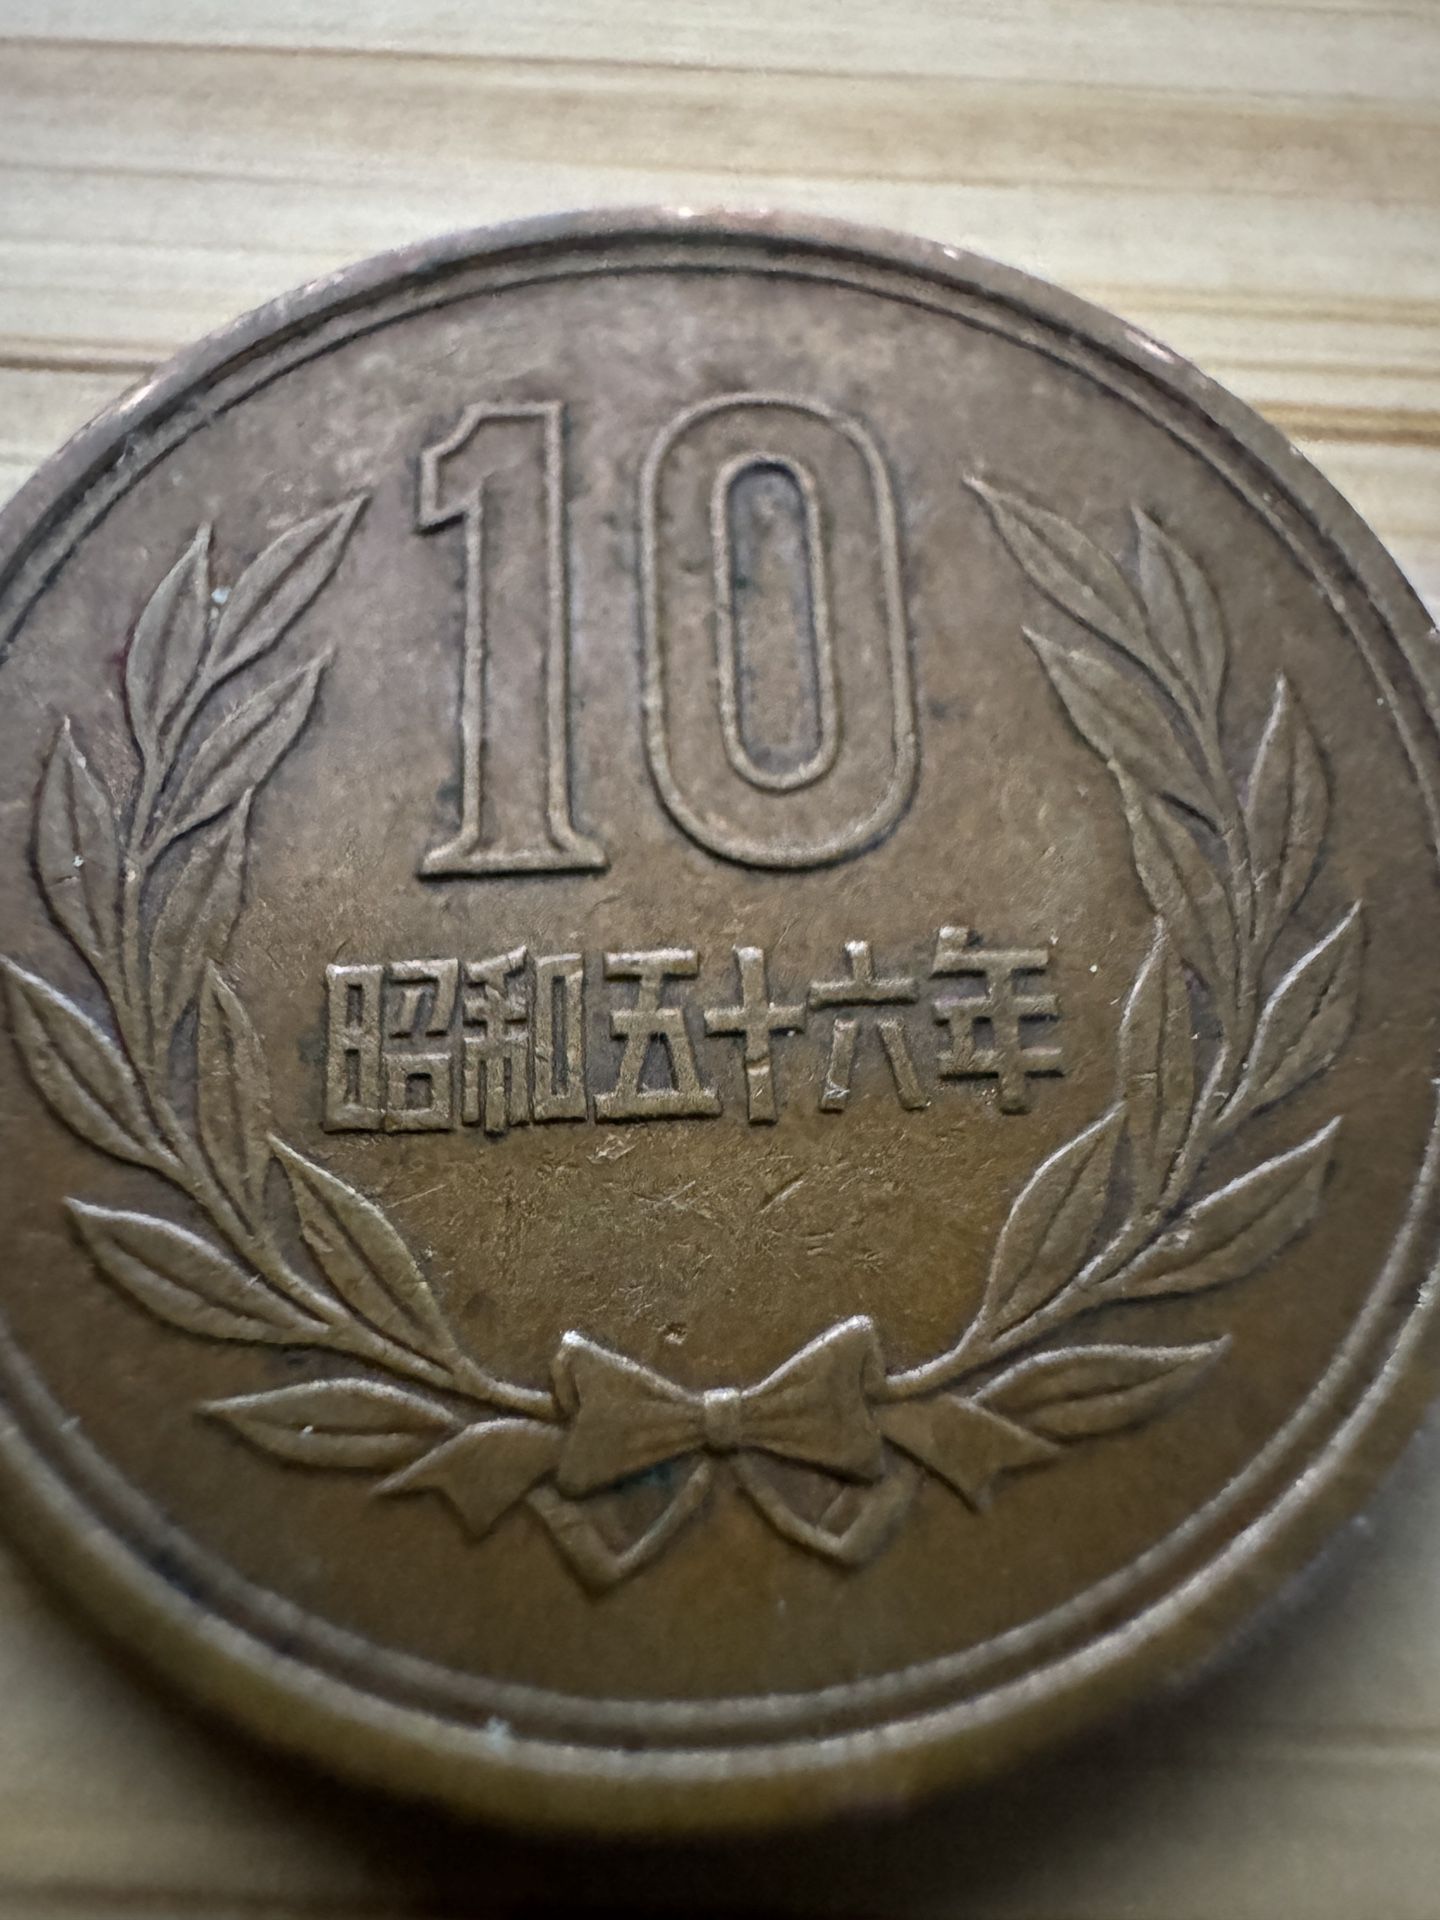 1954 10 yen coin